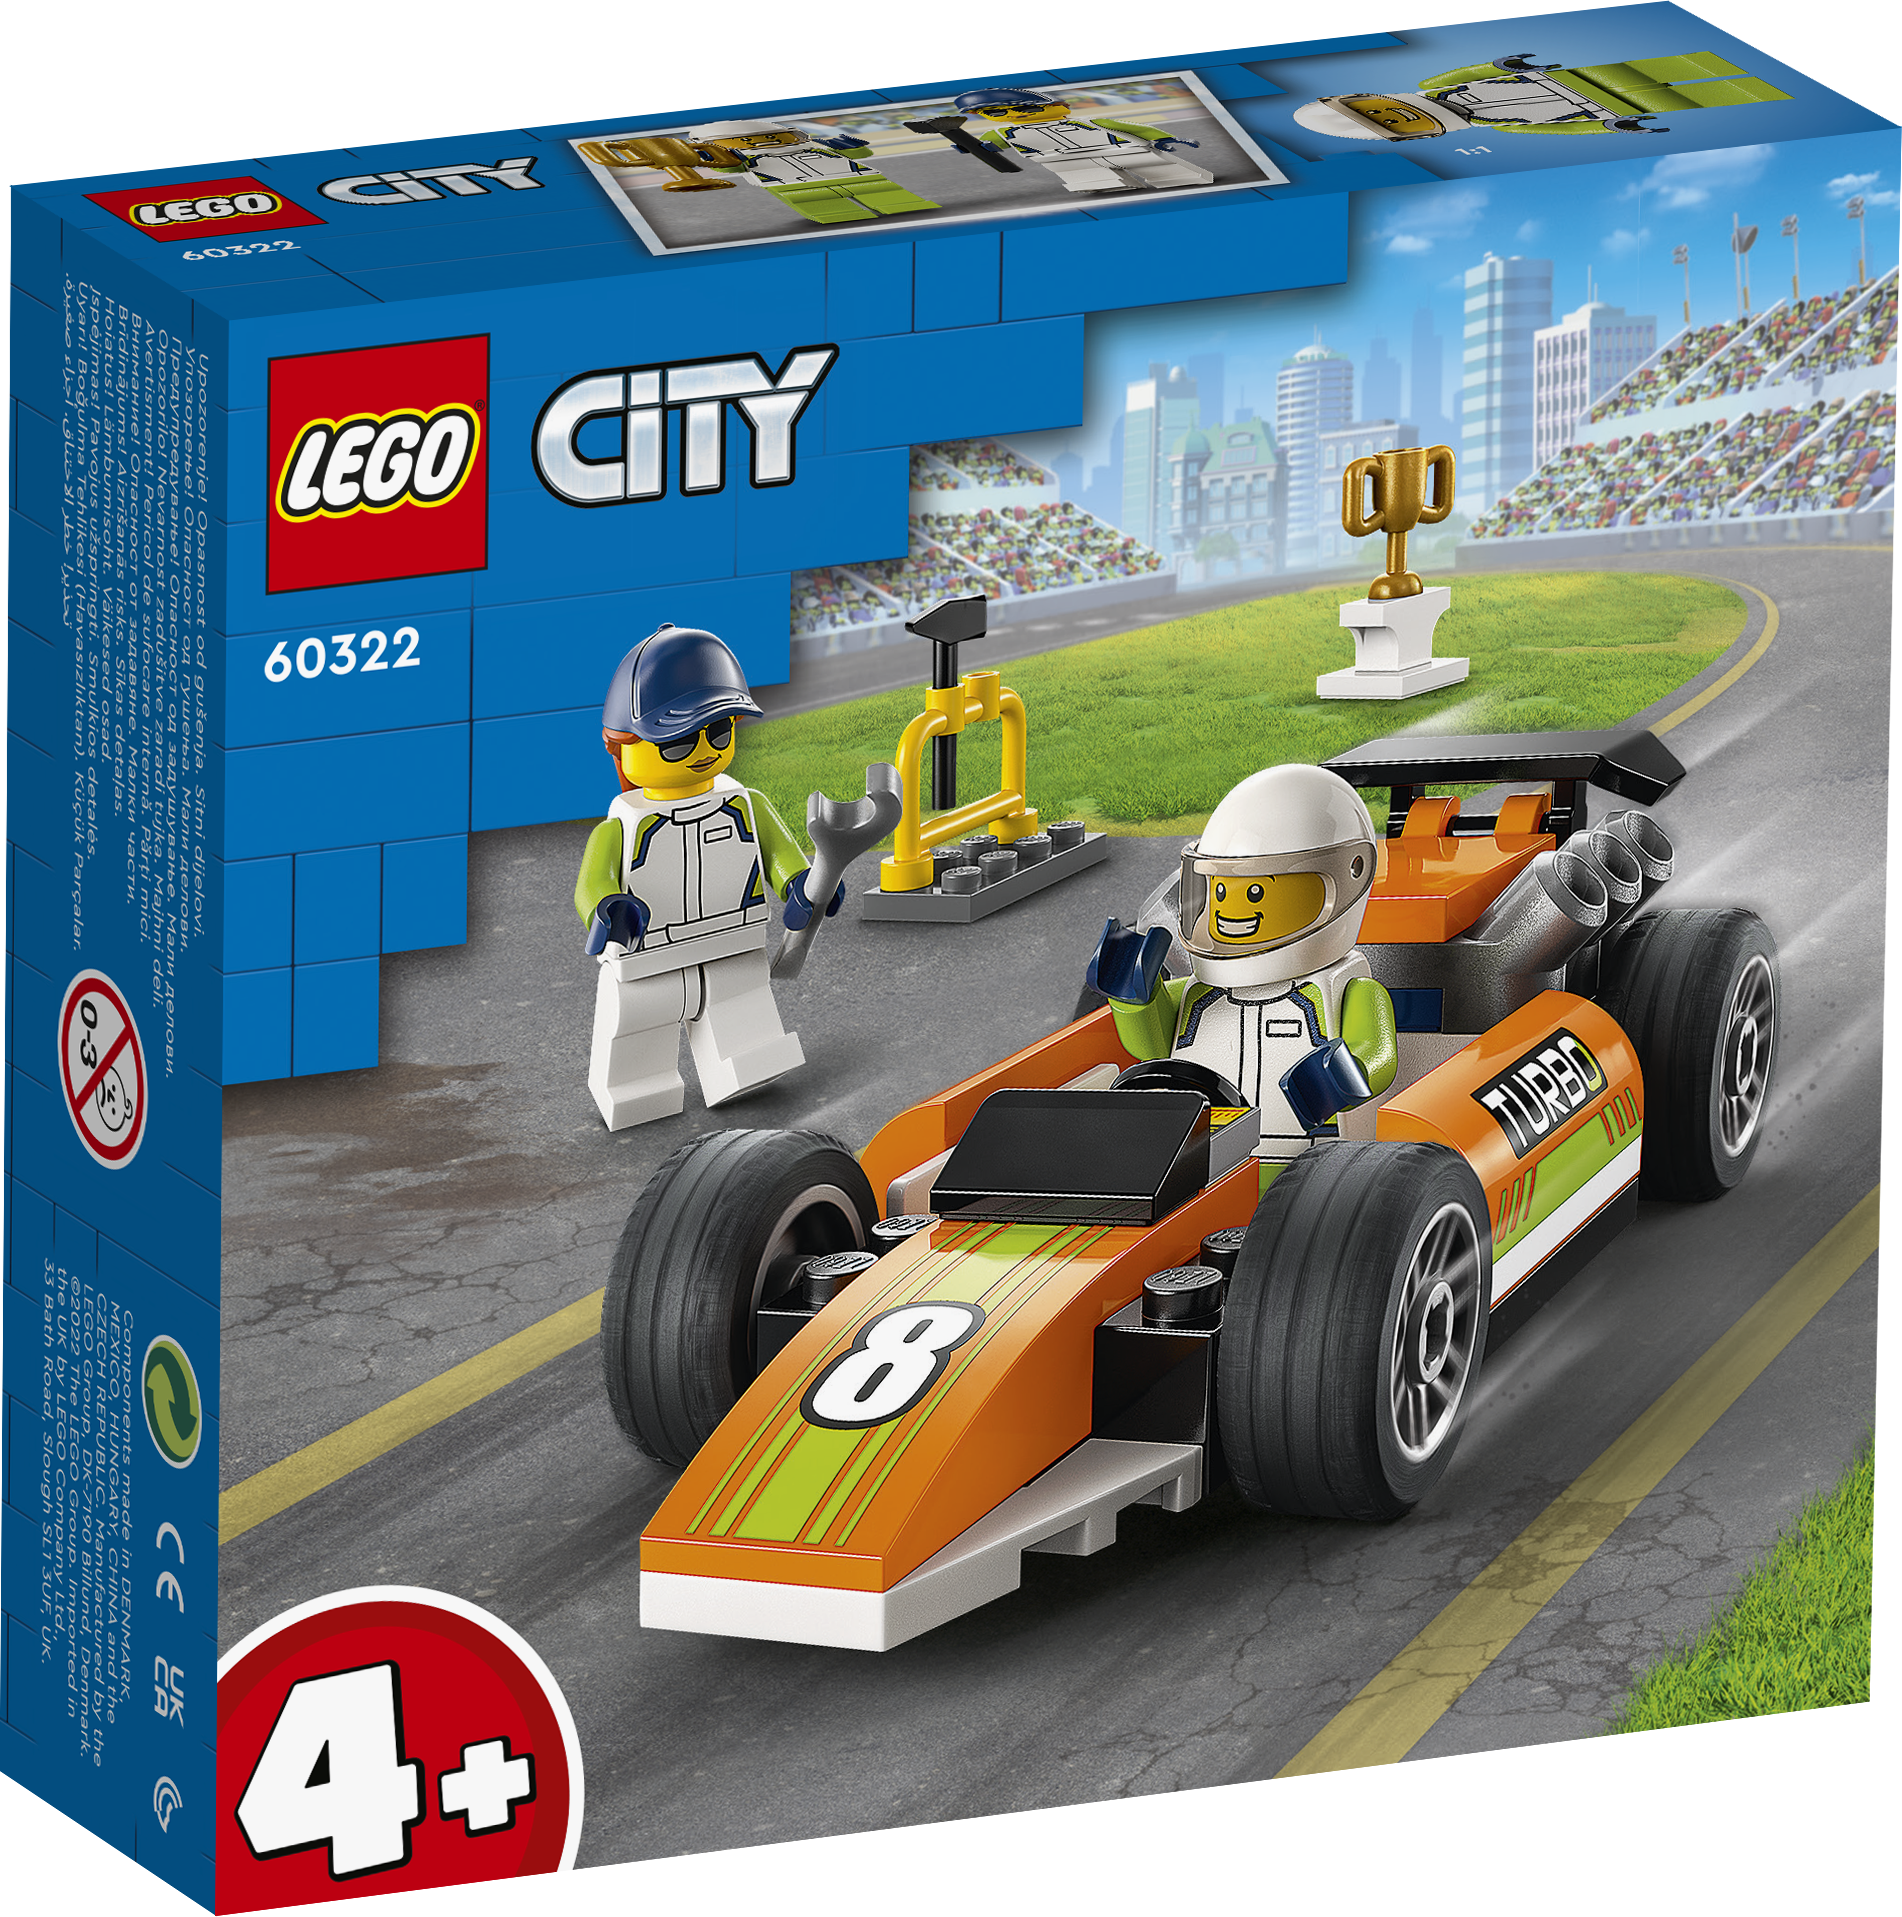 City Racerbil - 60322